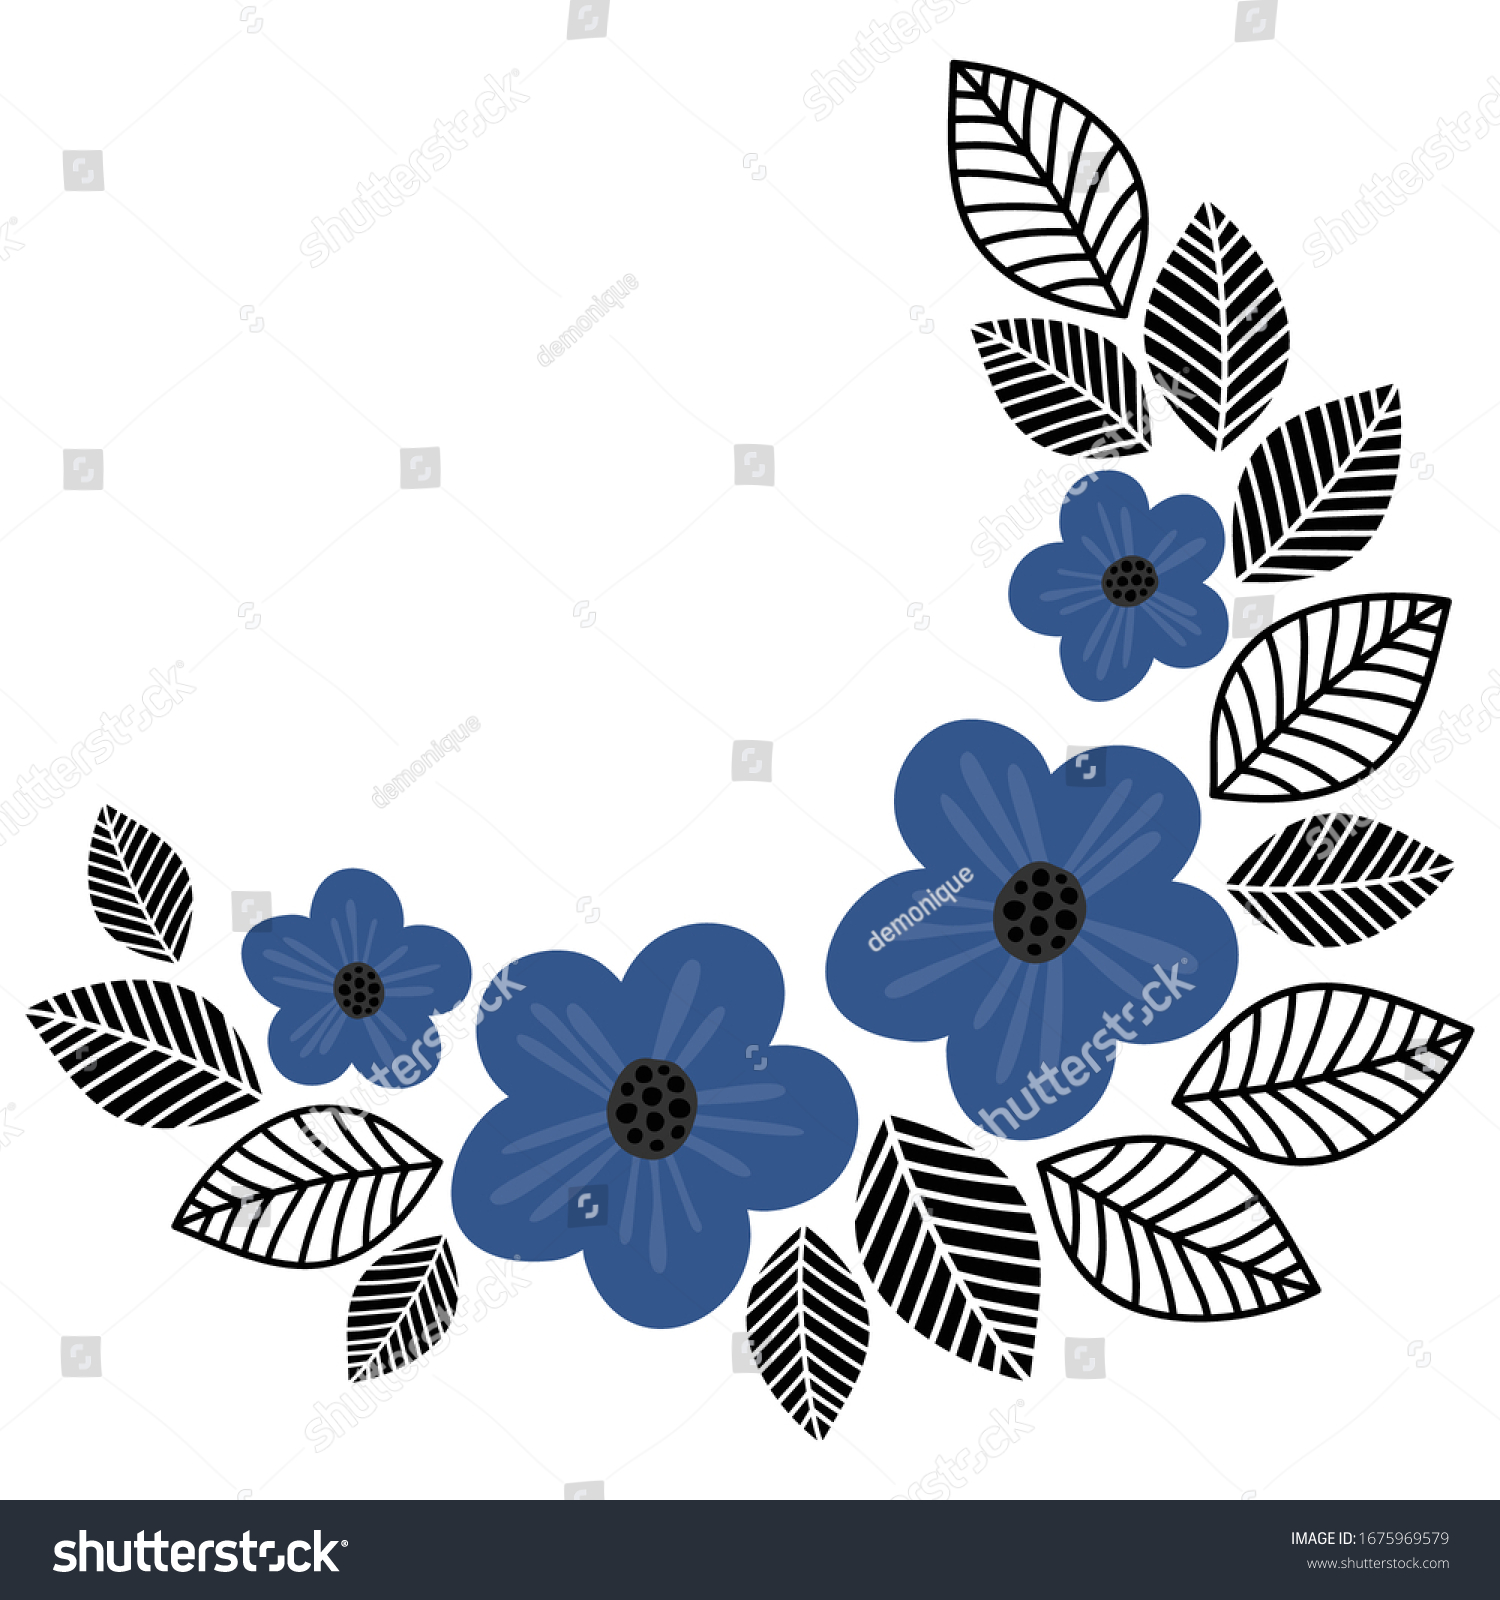 SVG of blue flowers black leaves spring summer fresh botanical half wreath centerpiece decorative bottom card poster element illustration isolated on white background svg